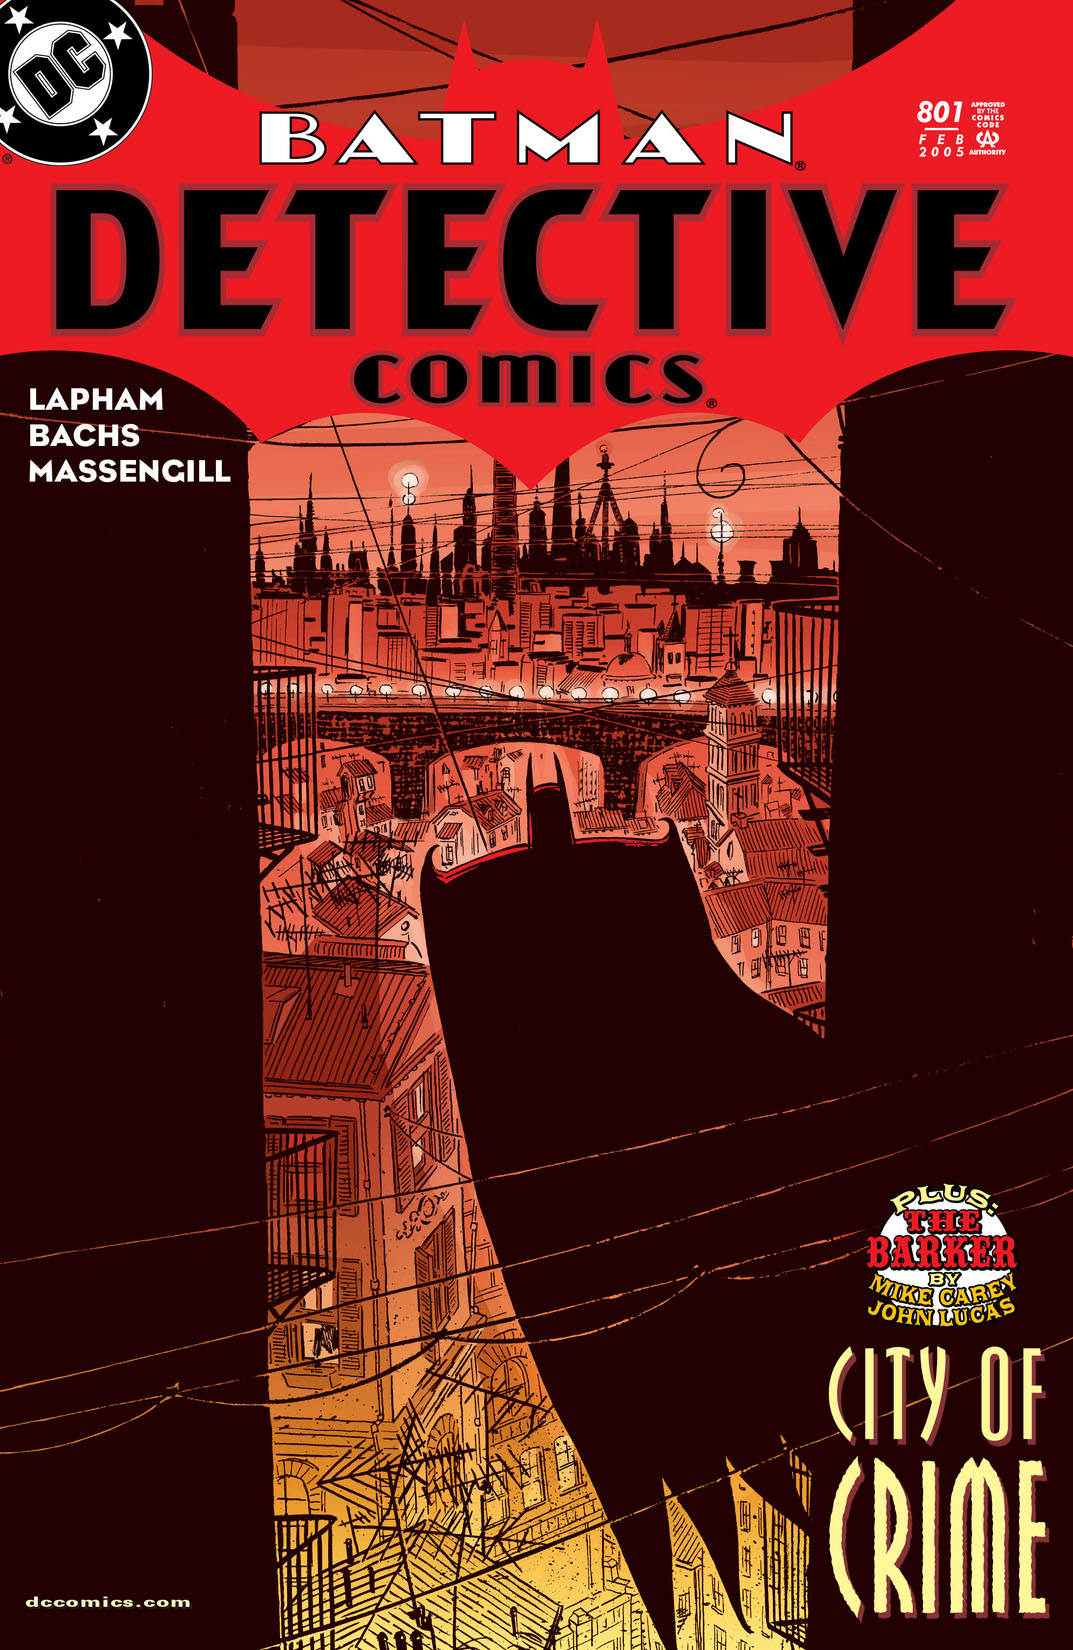 Detective Comics (1937-) #801 preview images